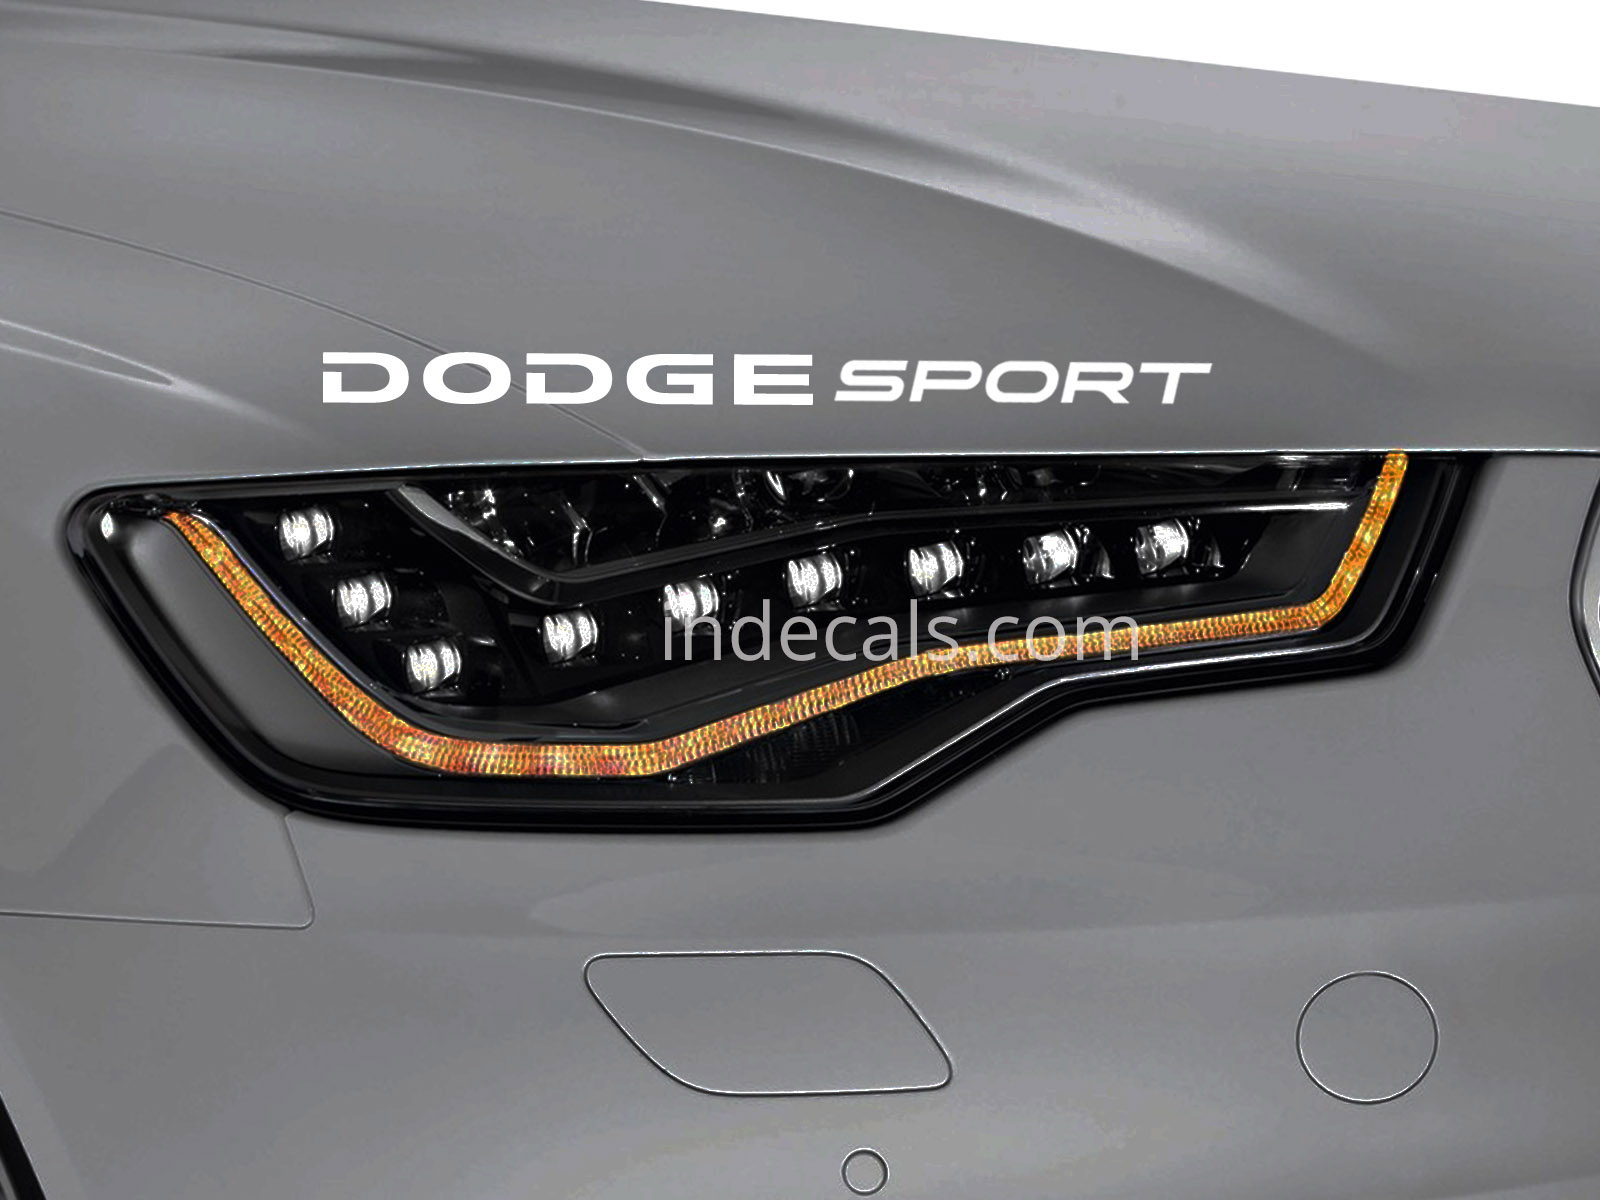 1 x Dodge Sport Sticker for Eyebrow - White